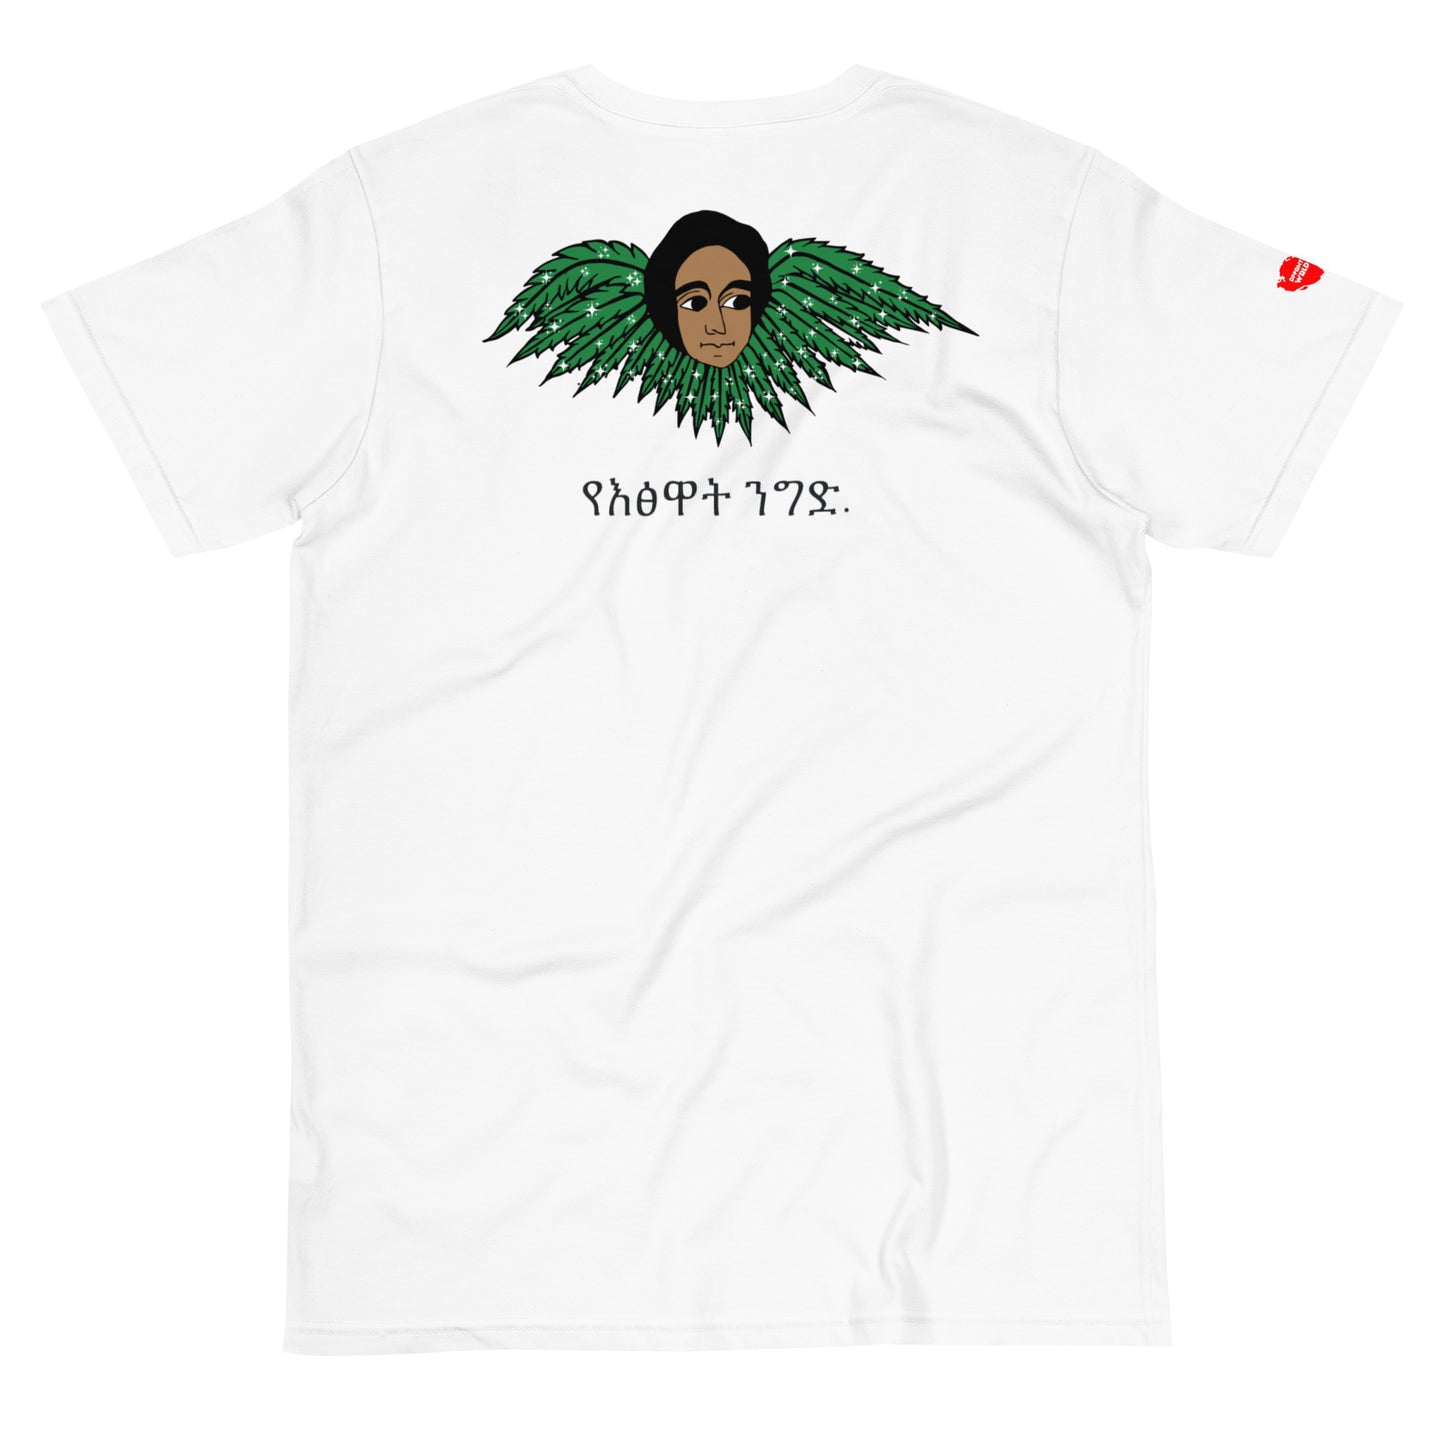 DFFRNTWRLD® Big Ethiopia - Organic T-Shirt